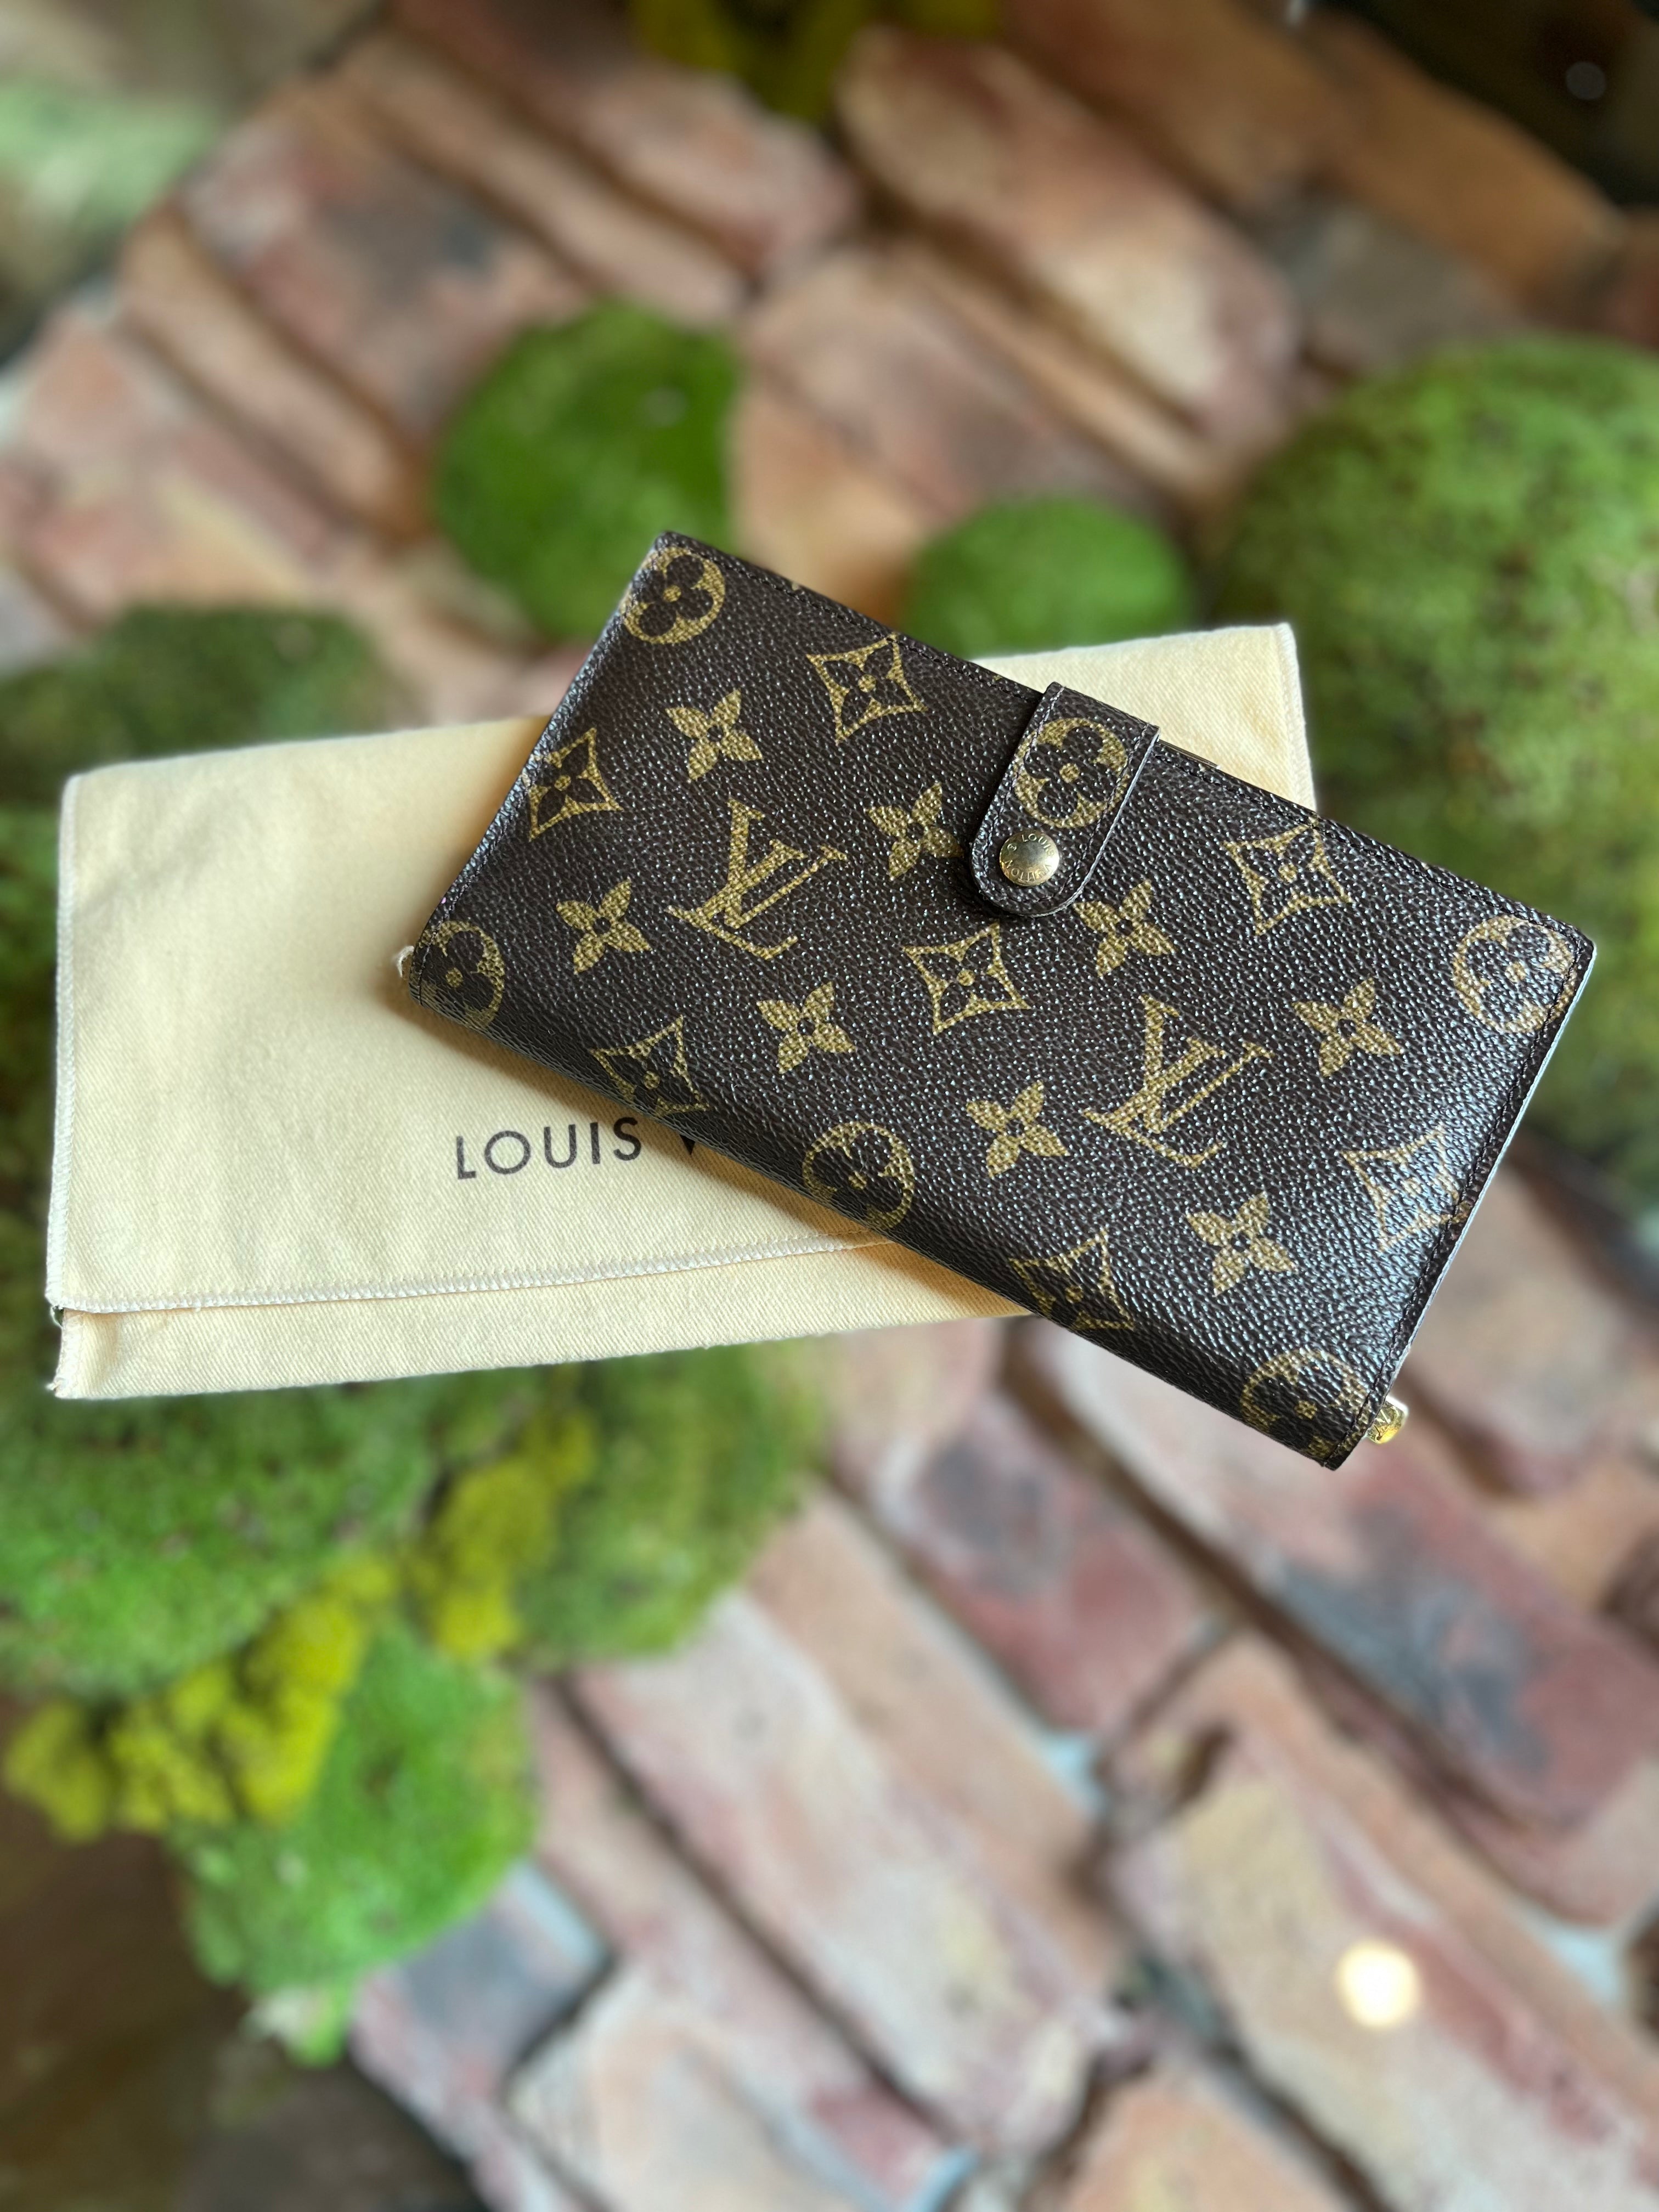 LOUIS VUITTON French purse wallet